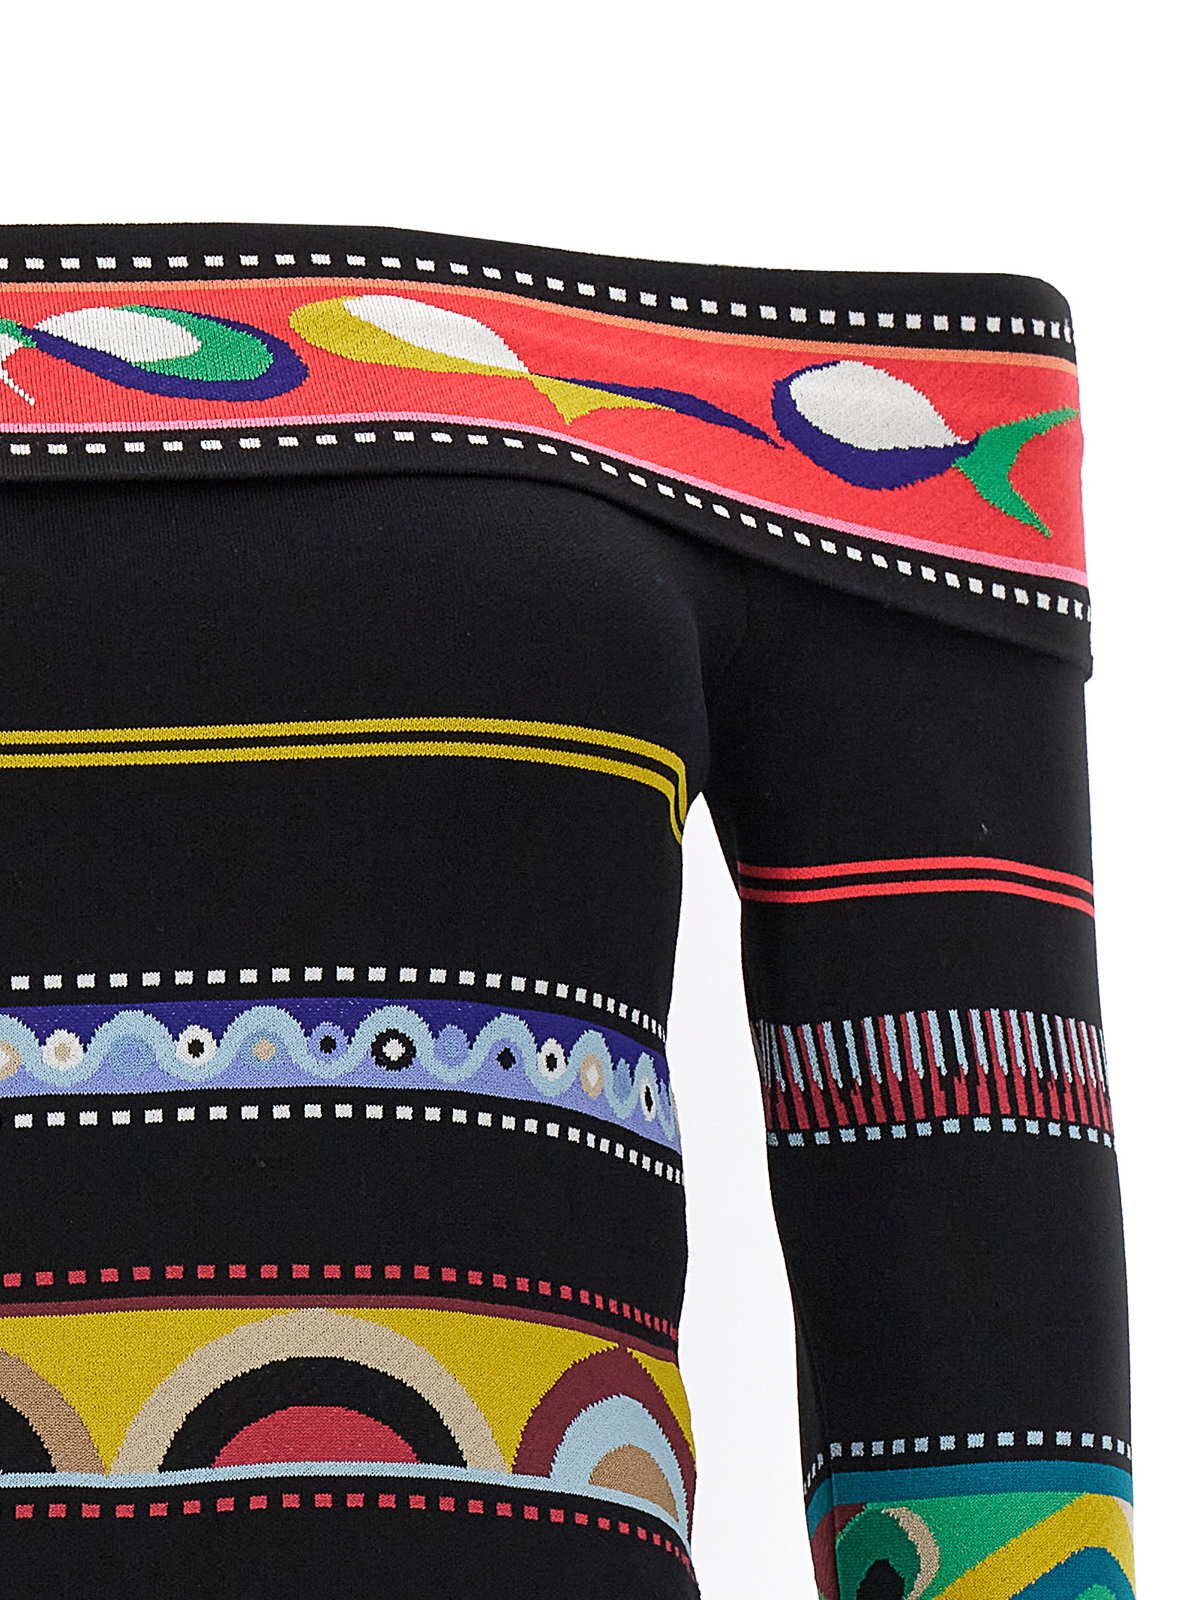 Shop Emilio Pucci Jacquard Patterned Top In Multicolour